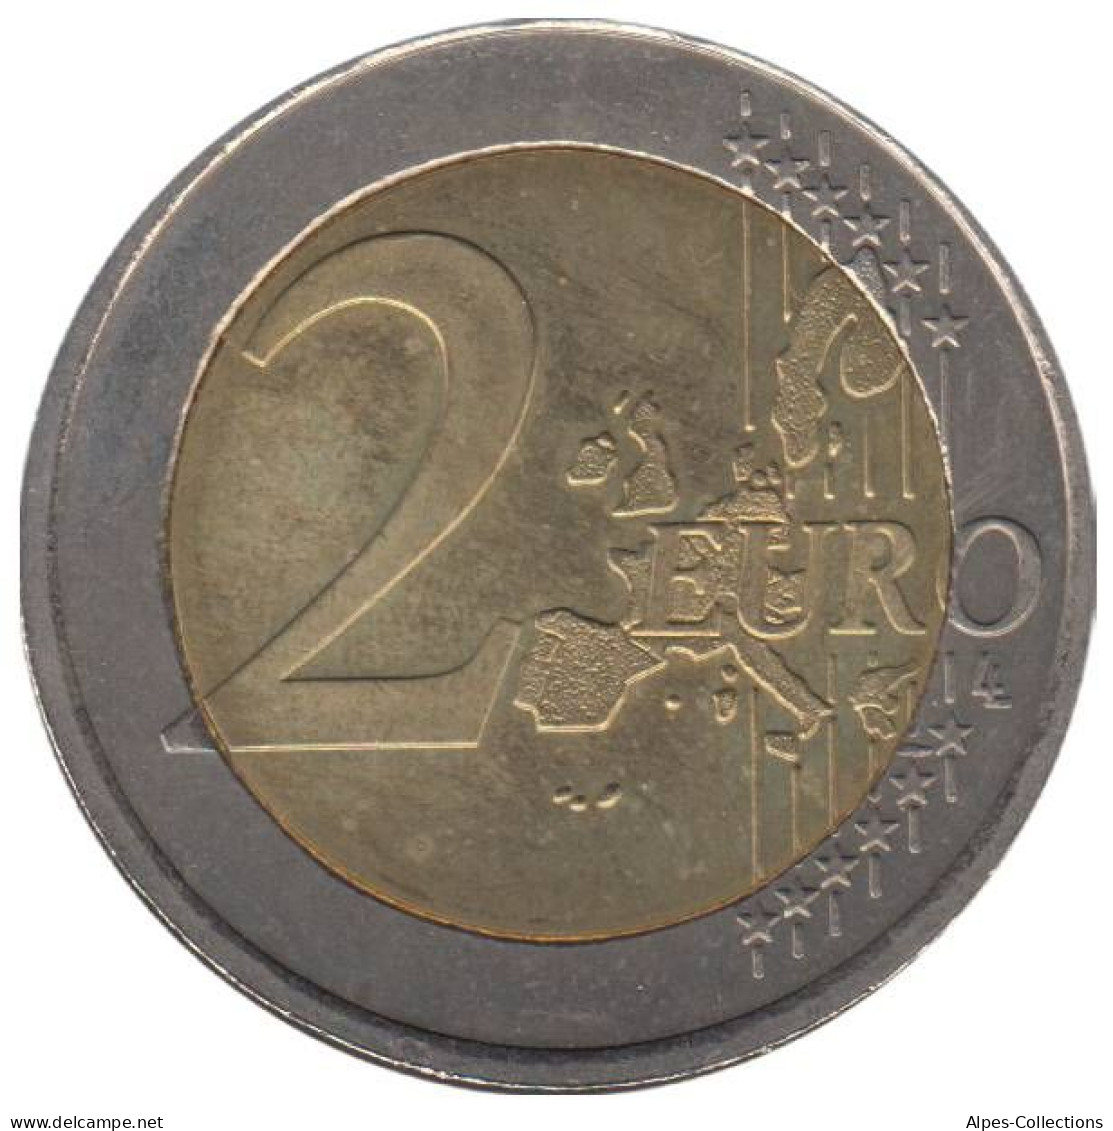 IR20005.1 - IRLANDE - 2 Euros - 2005 - Irland